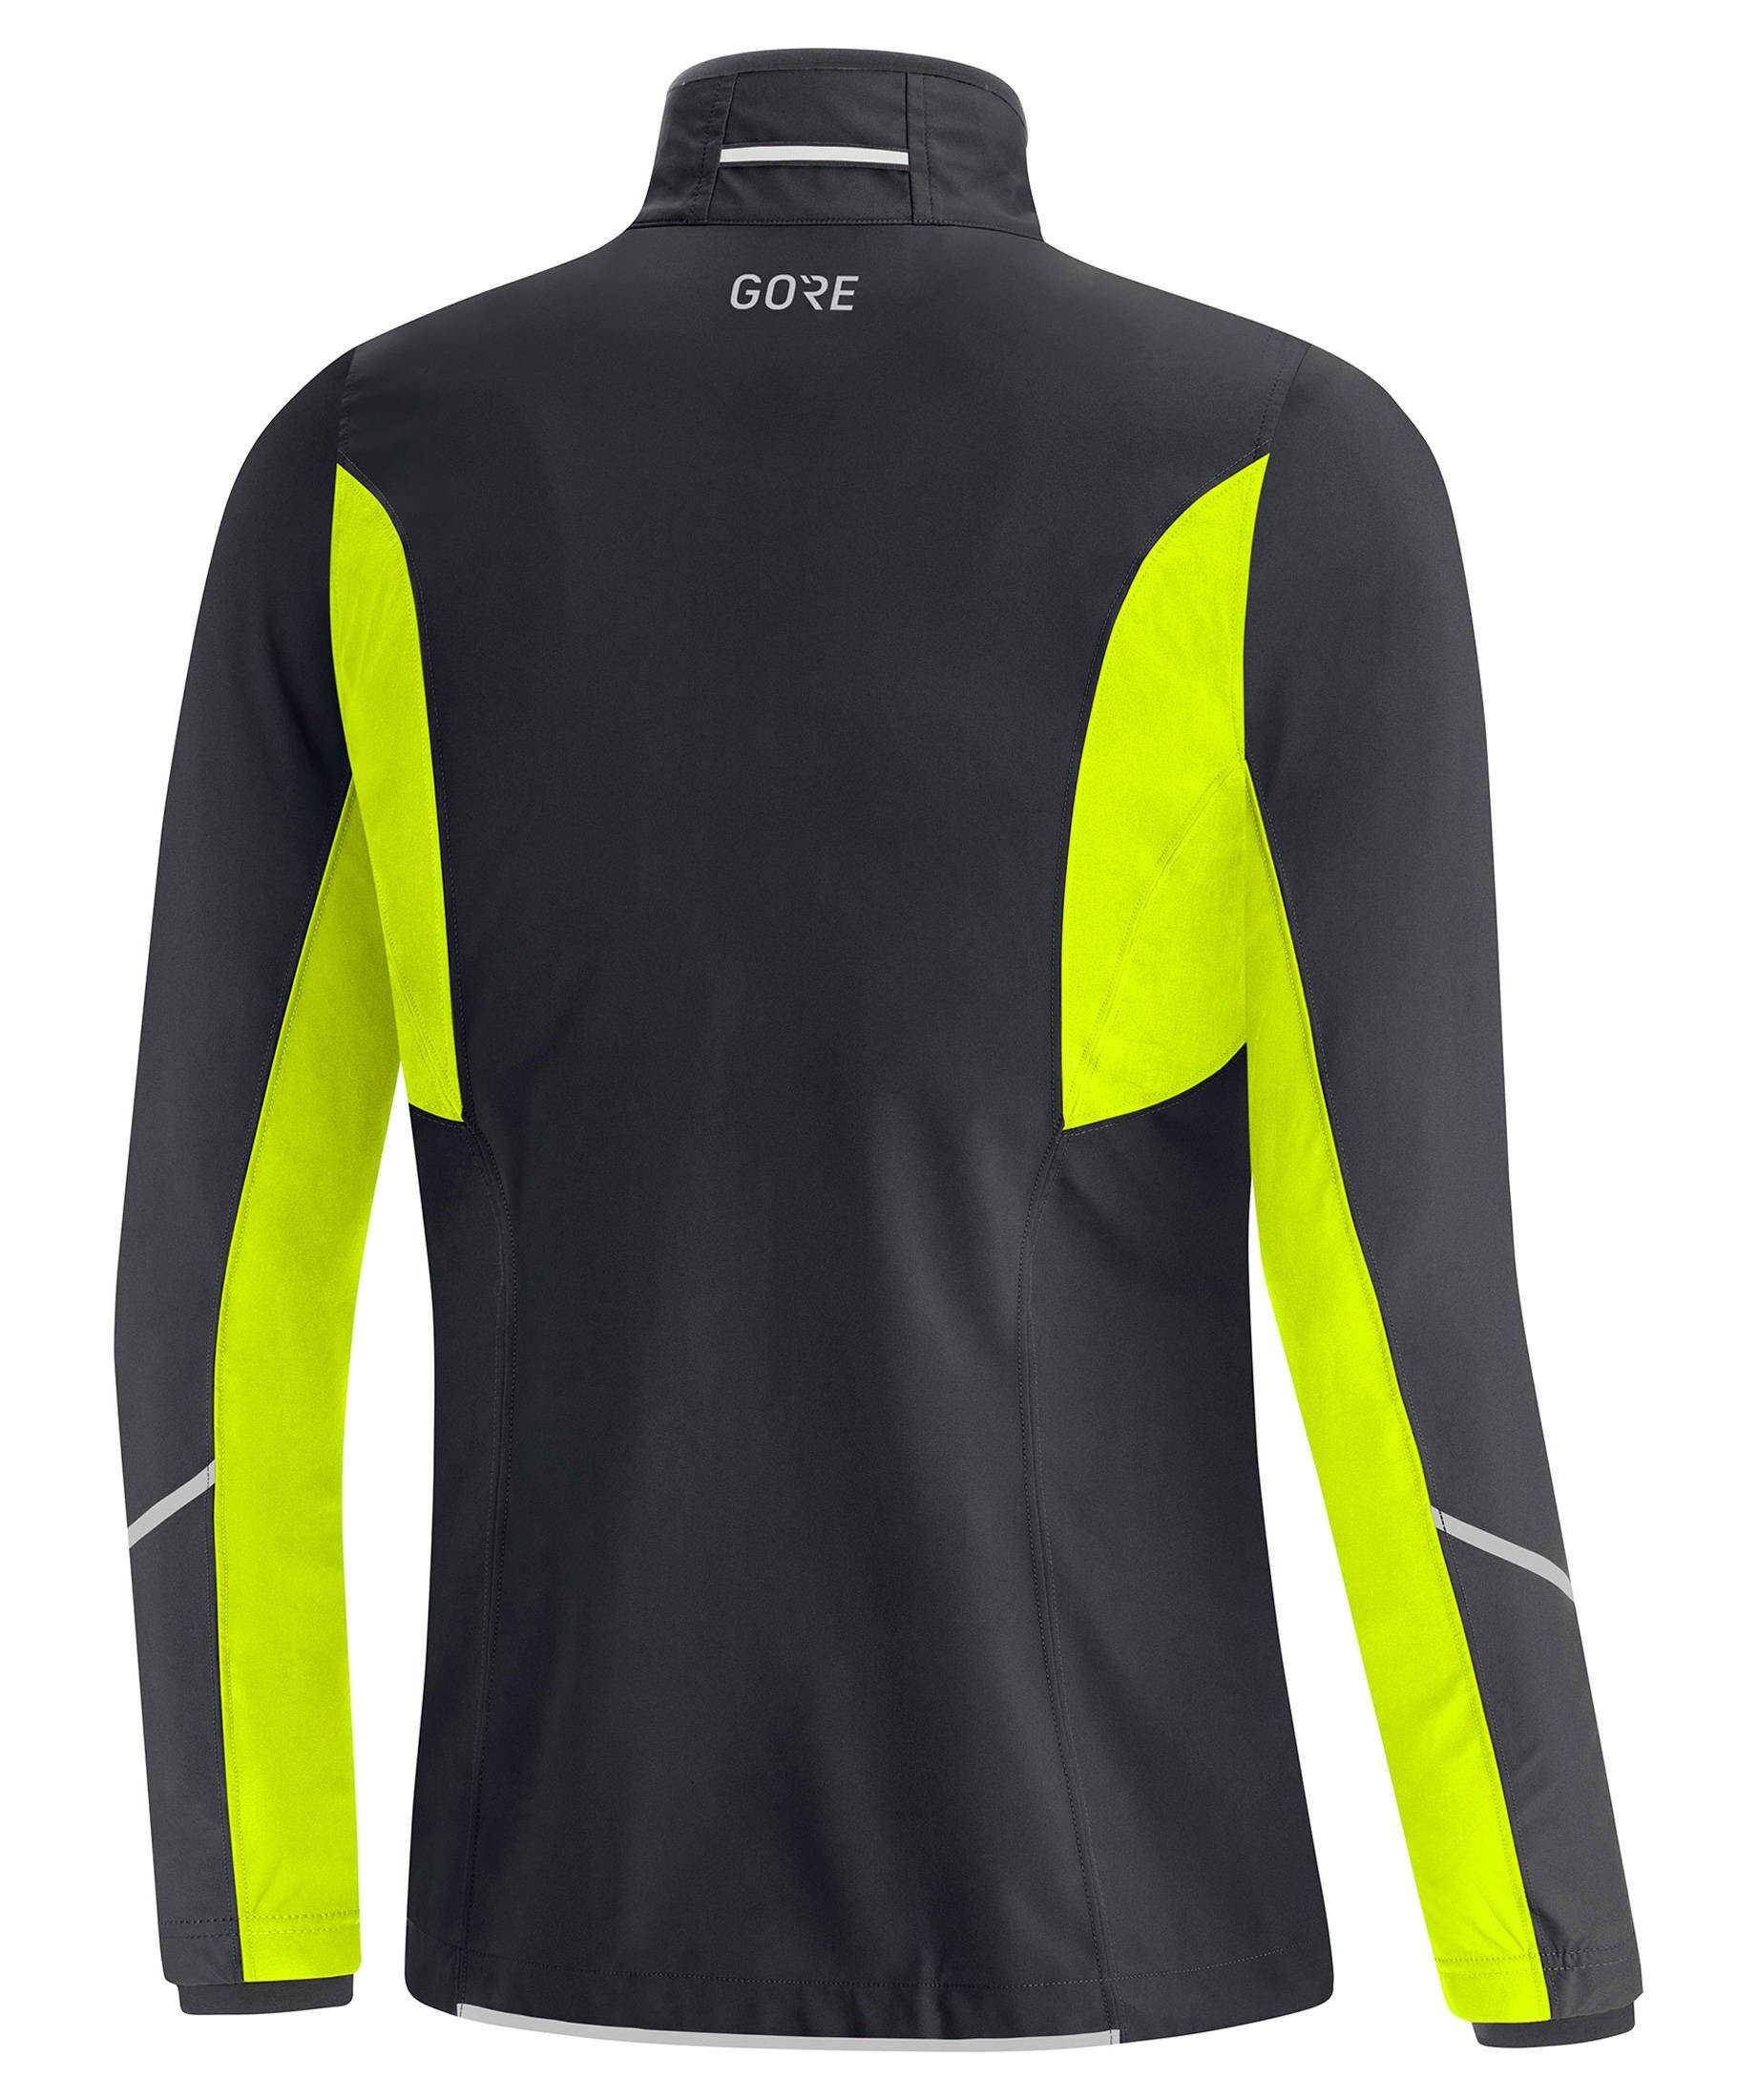 Damen Gore-Tex black/neon Laufjacke GORE® 9908 Laufsport Wear "R3 Infinium yellow Jacke